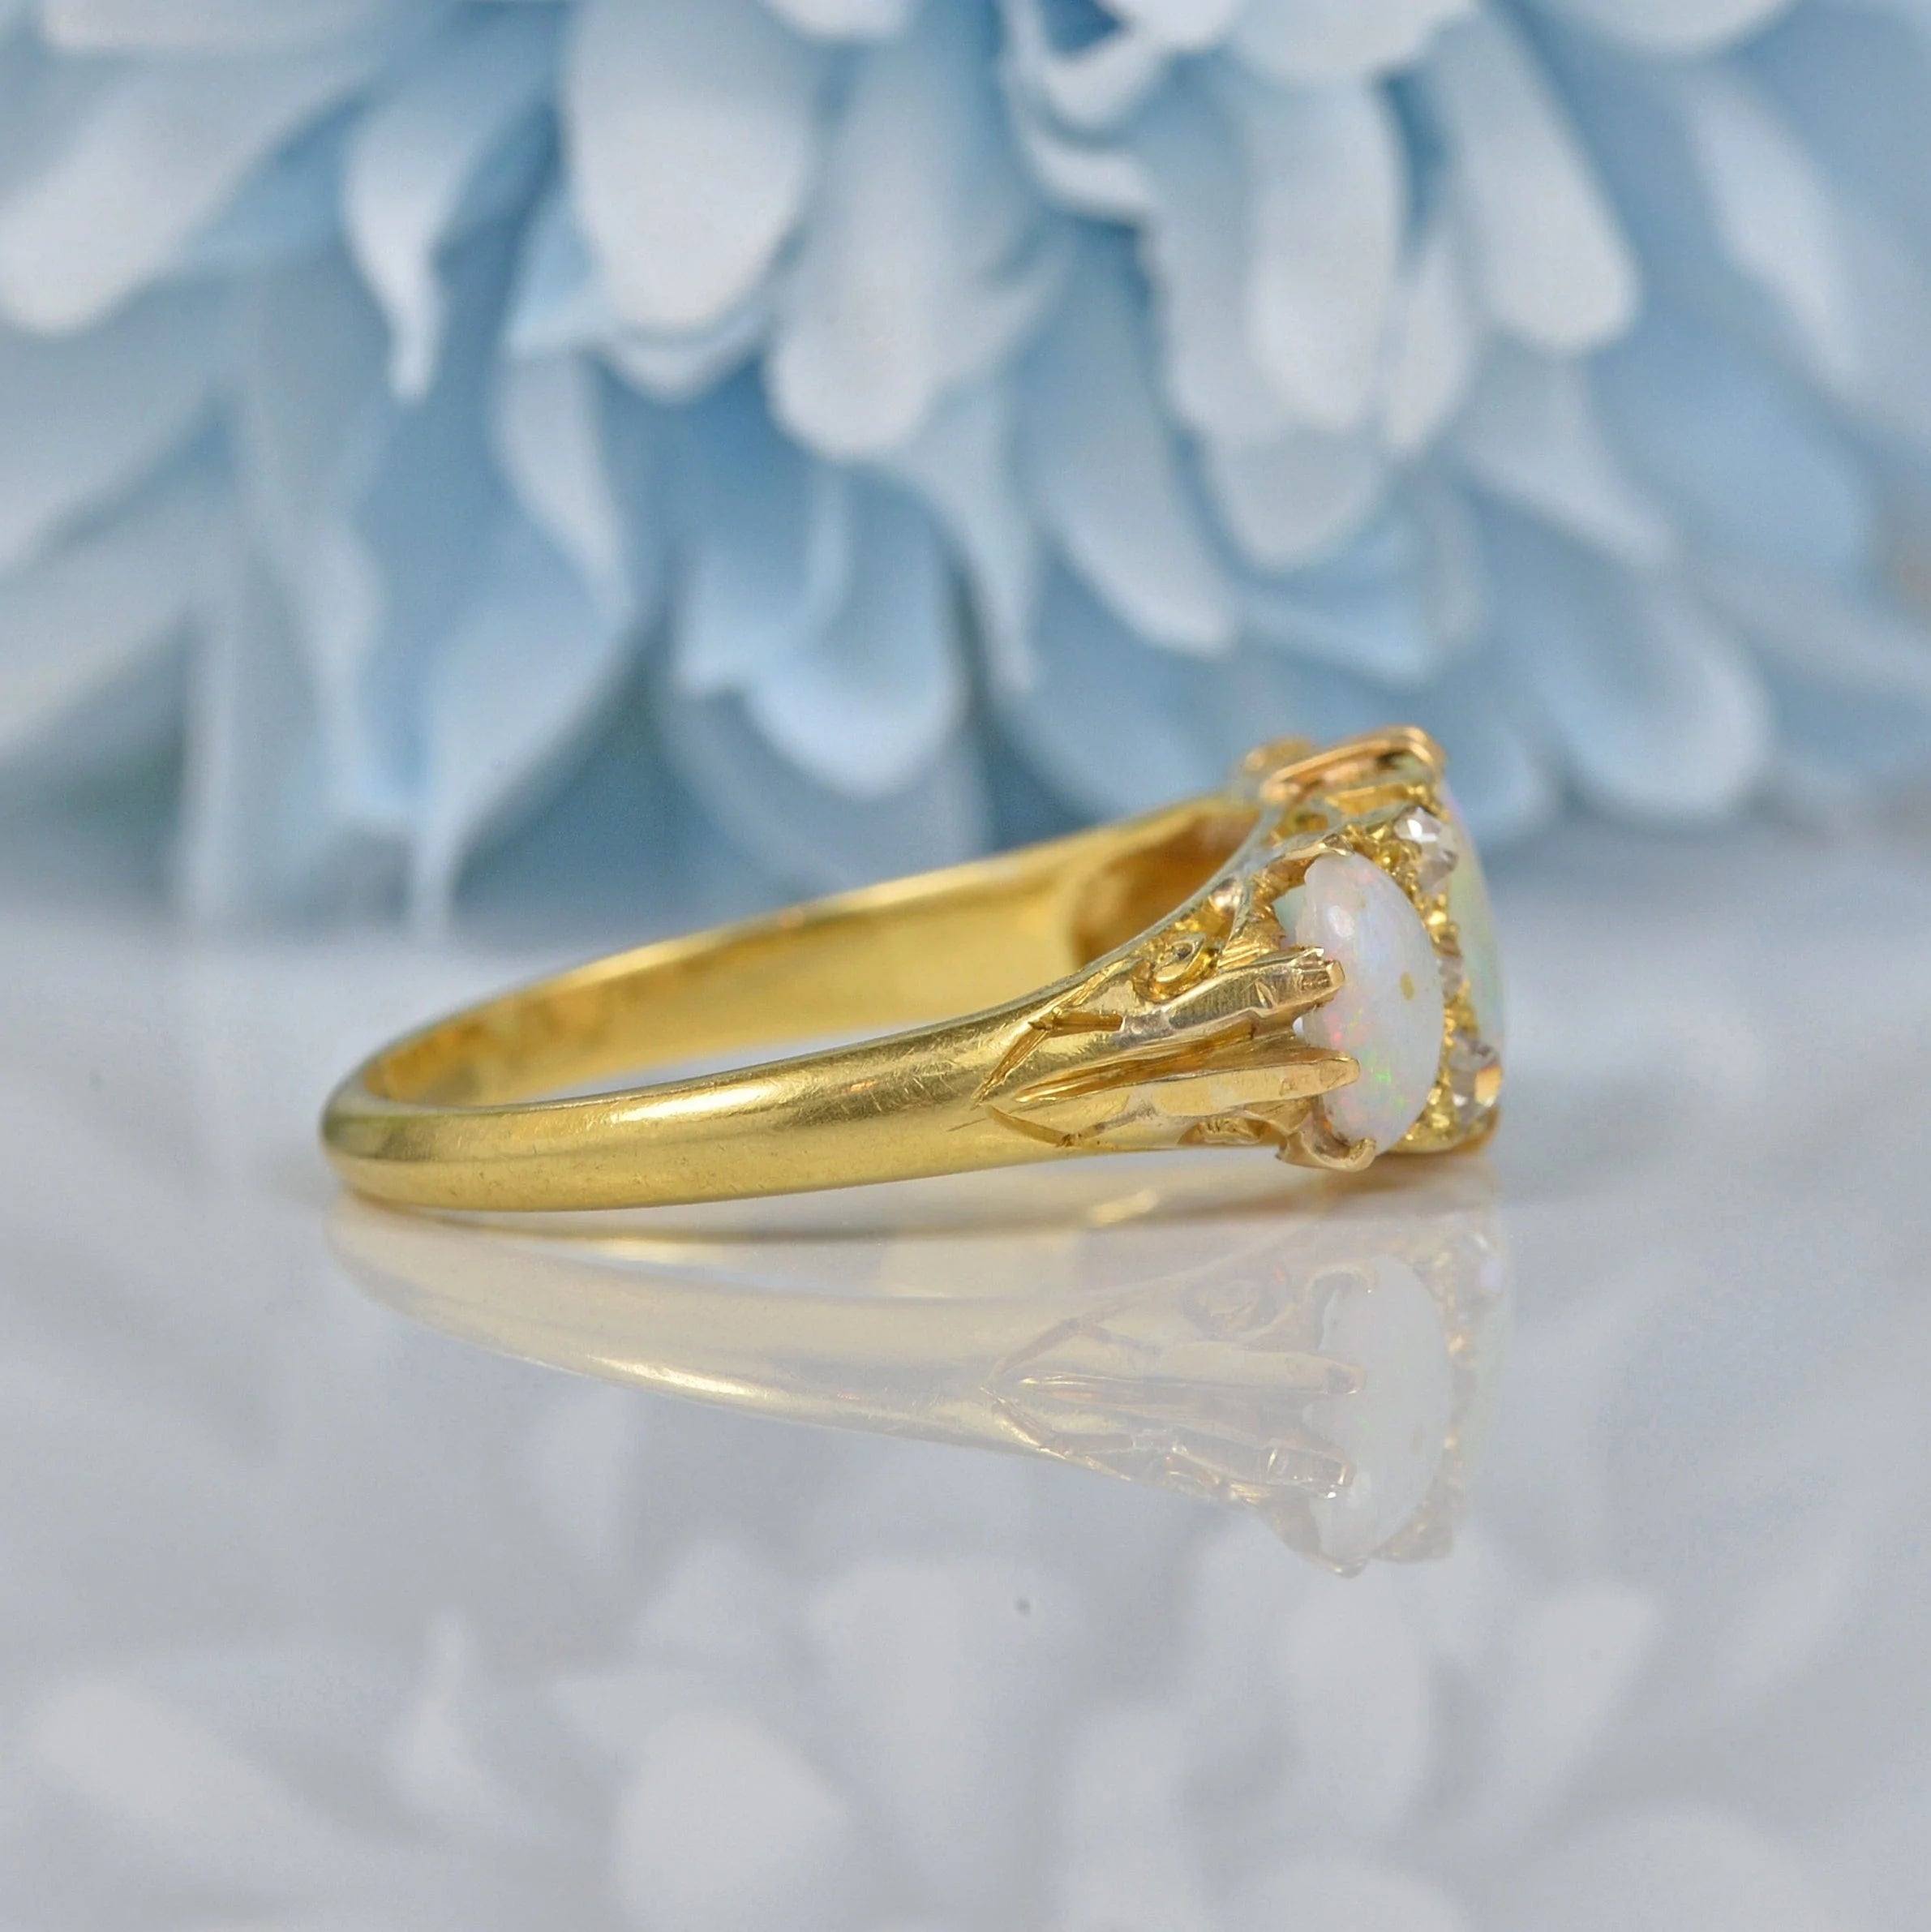 ANTIQUE EDWARDIAN OPAL & DIAMOND 18CT GOLD RING